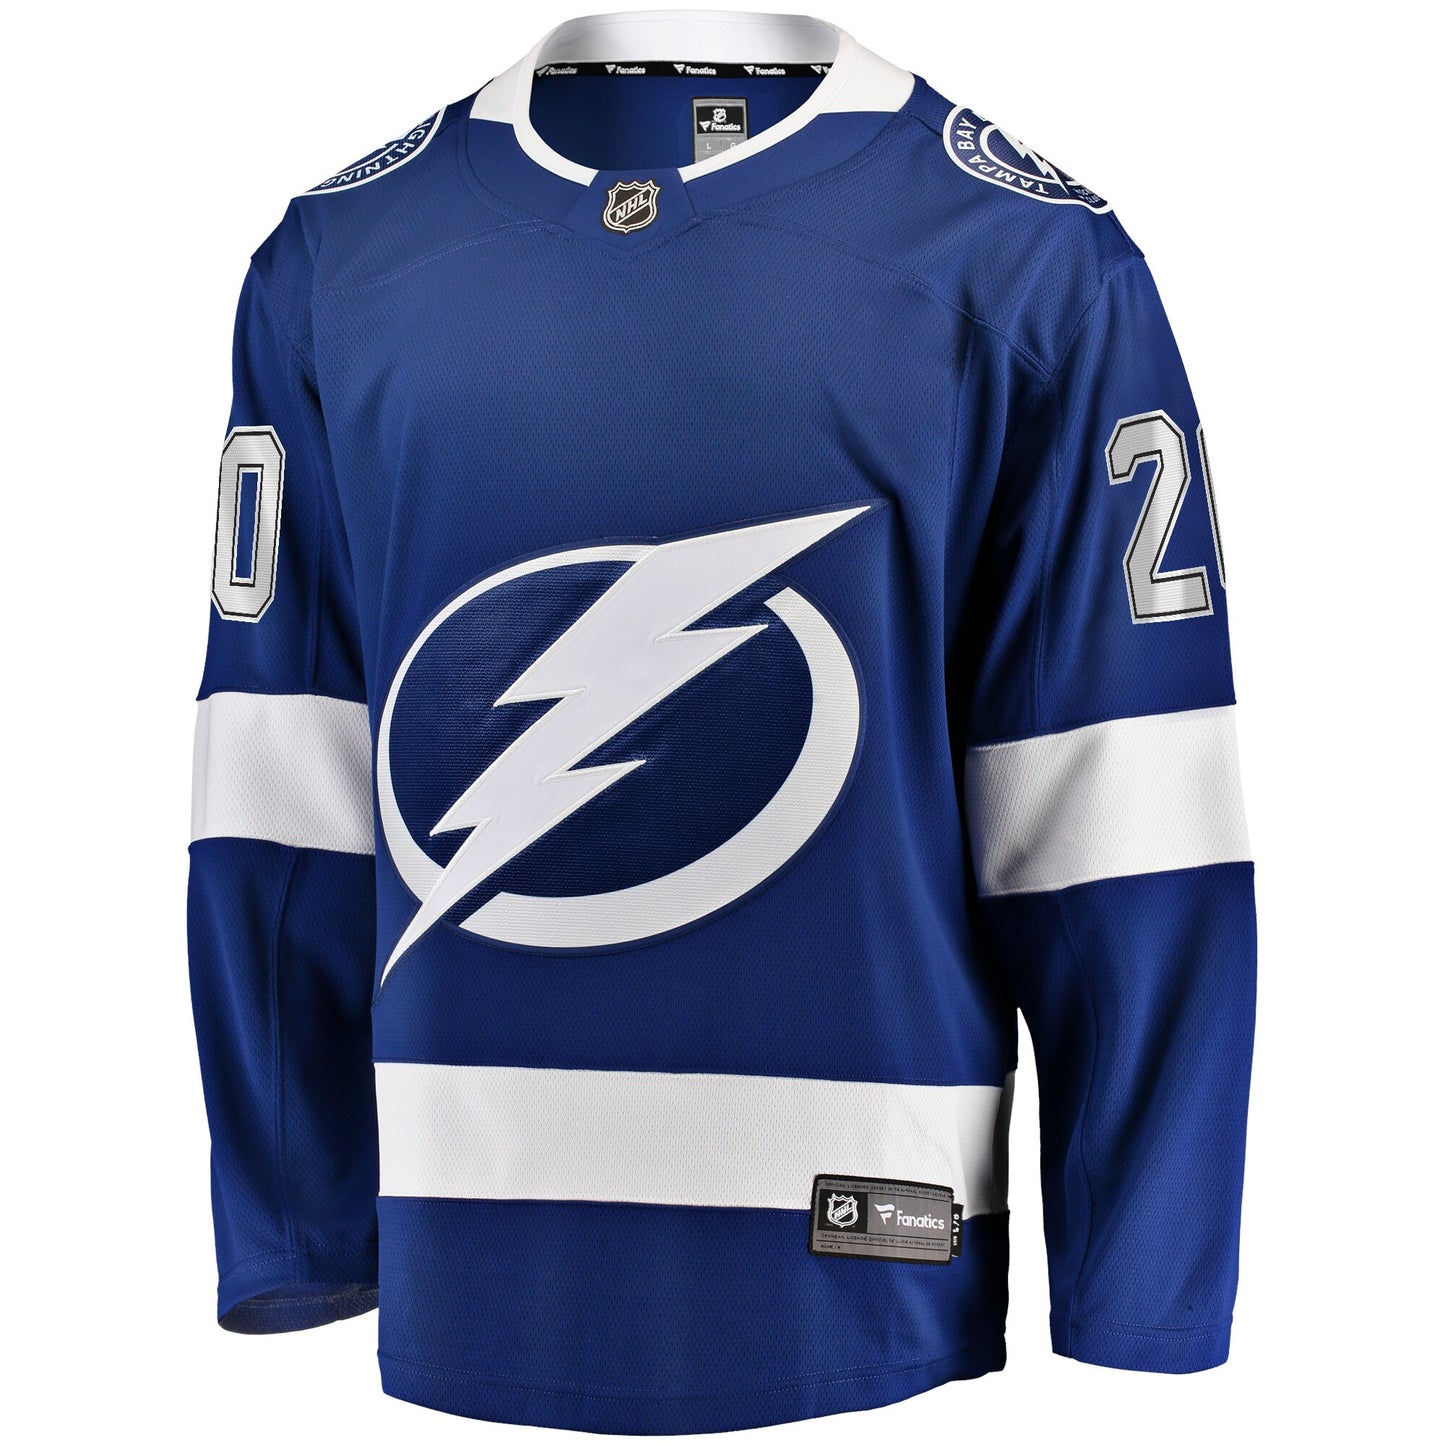 Nicholas Paul Tampa Bay Lightning Fanatics Branded Home Breakaway Player Jersey - Blue